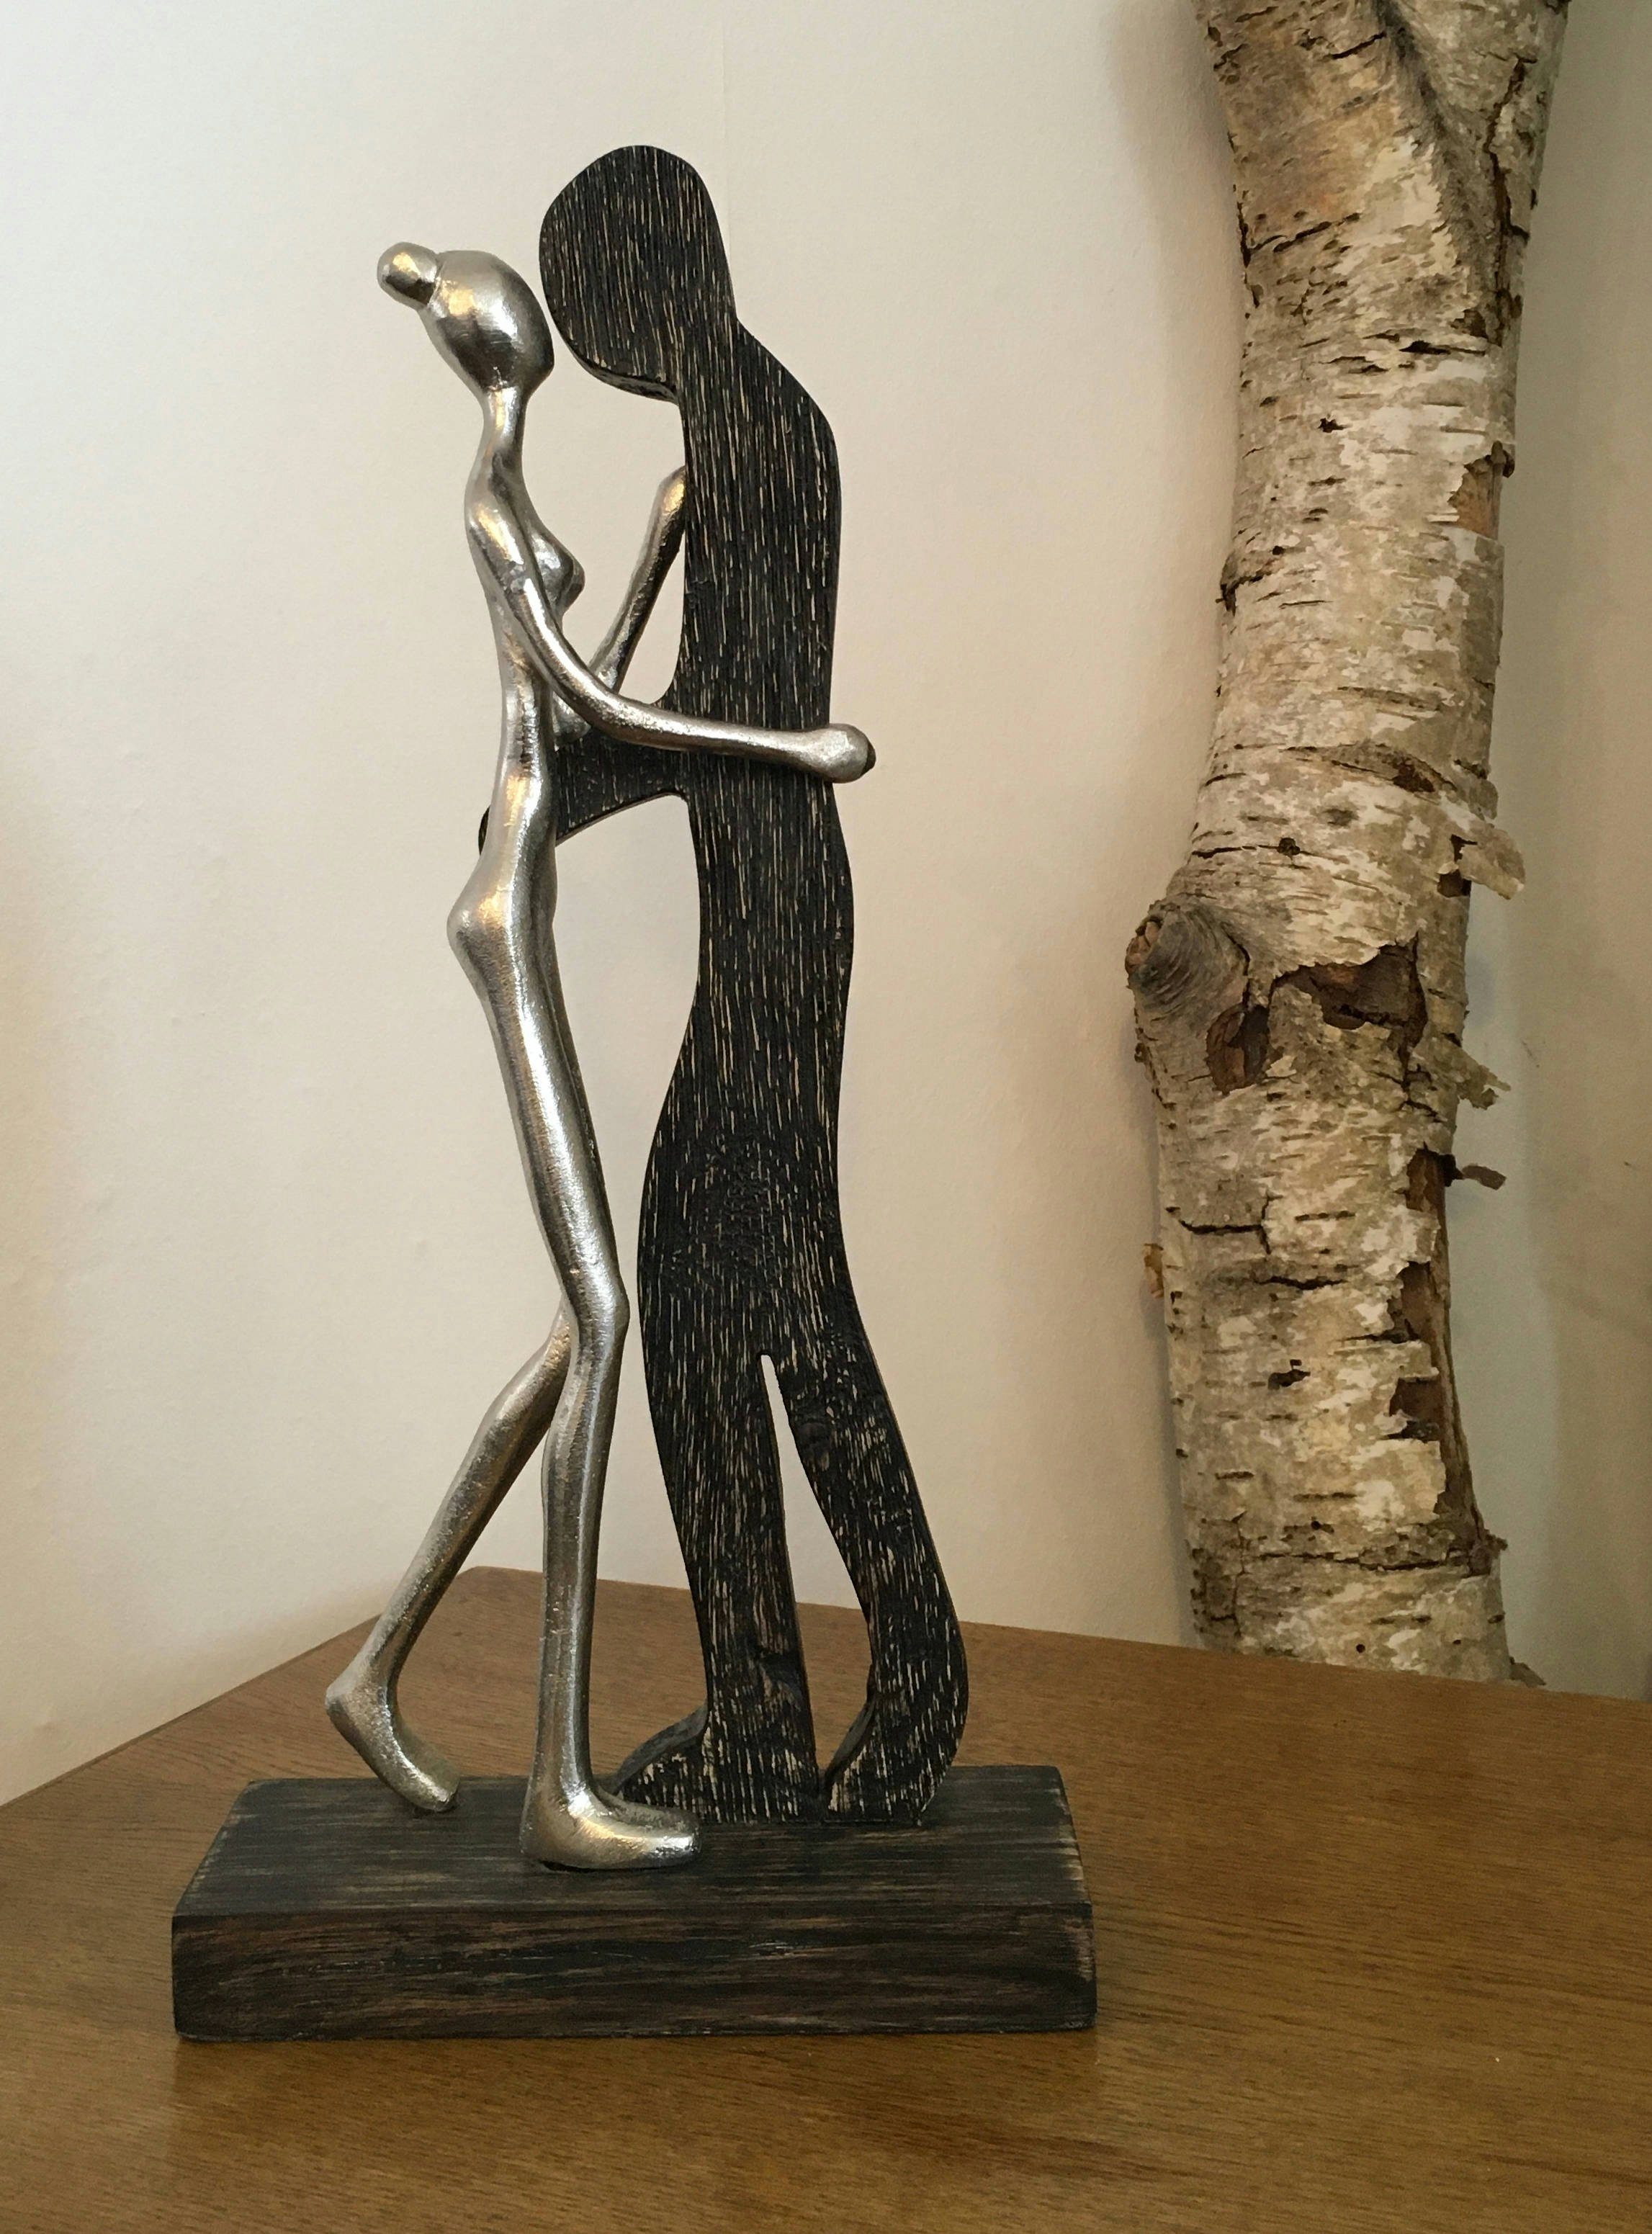 Moritz Skulptur Skulptur Holz, Tischdeko, stehend Holzdeko Tänzer 41x7x19cm, Wanddeko, Dekoobjekt Fensterdeko